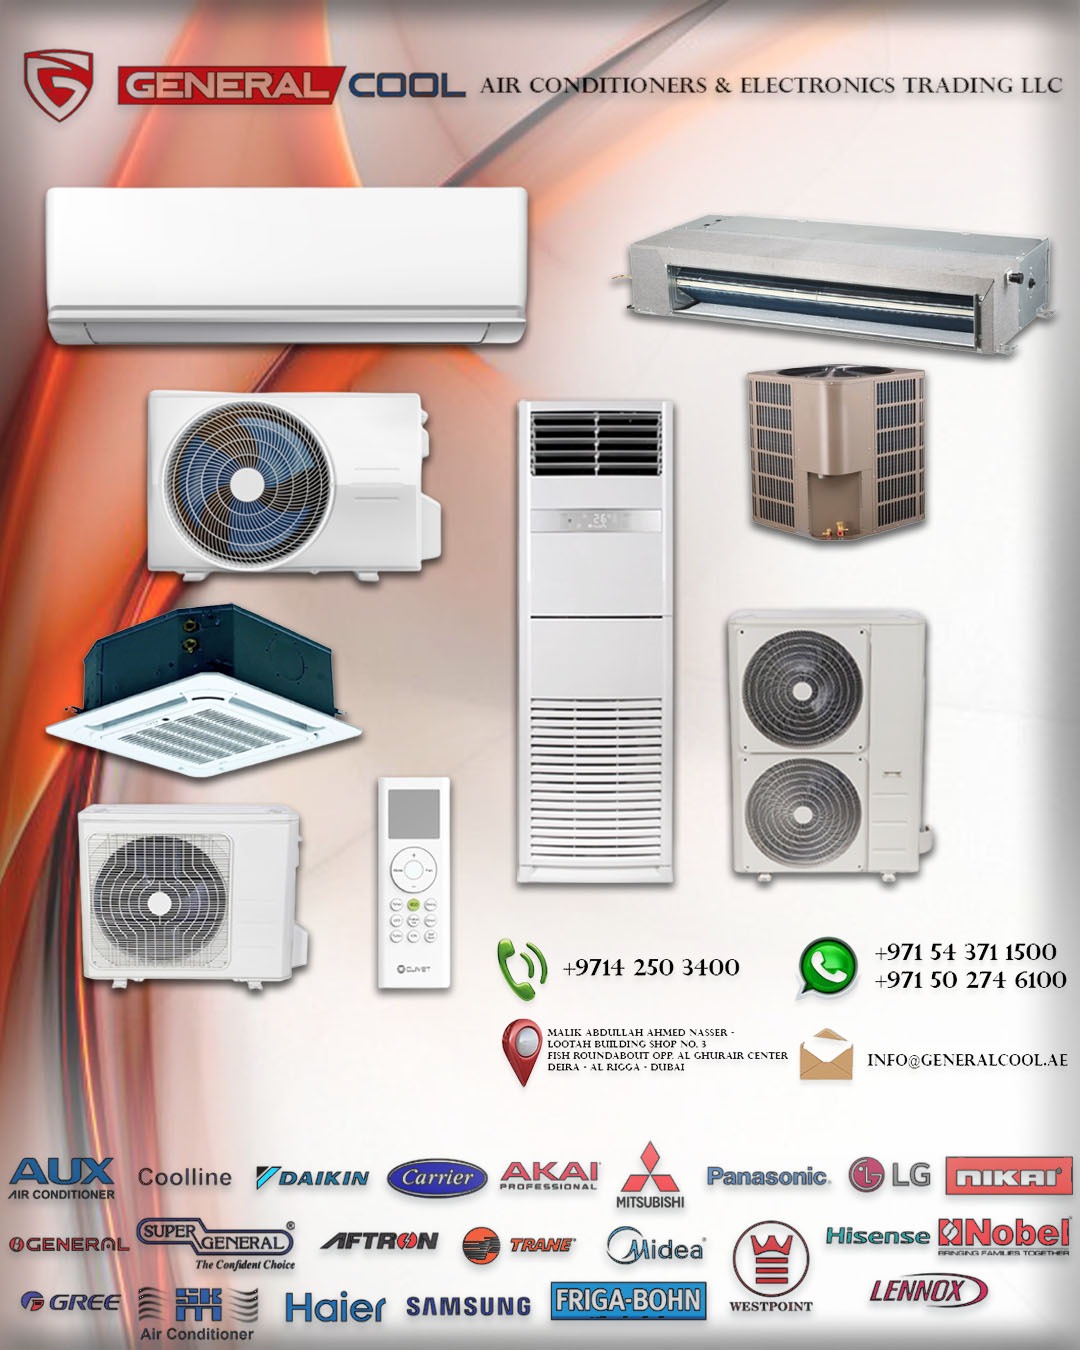 Air Conditioners Dealer, Distributor, Supplier in Dubai UAE